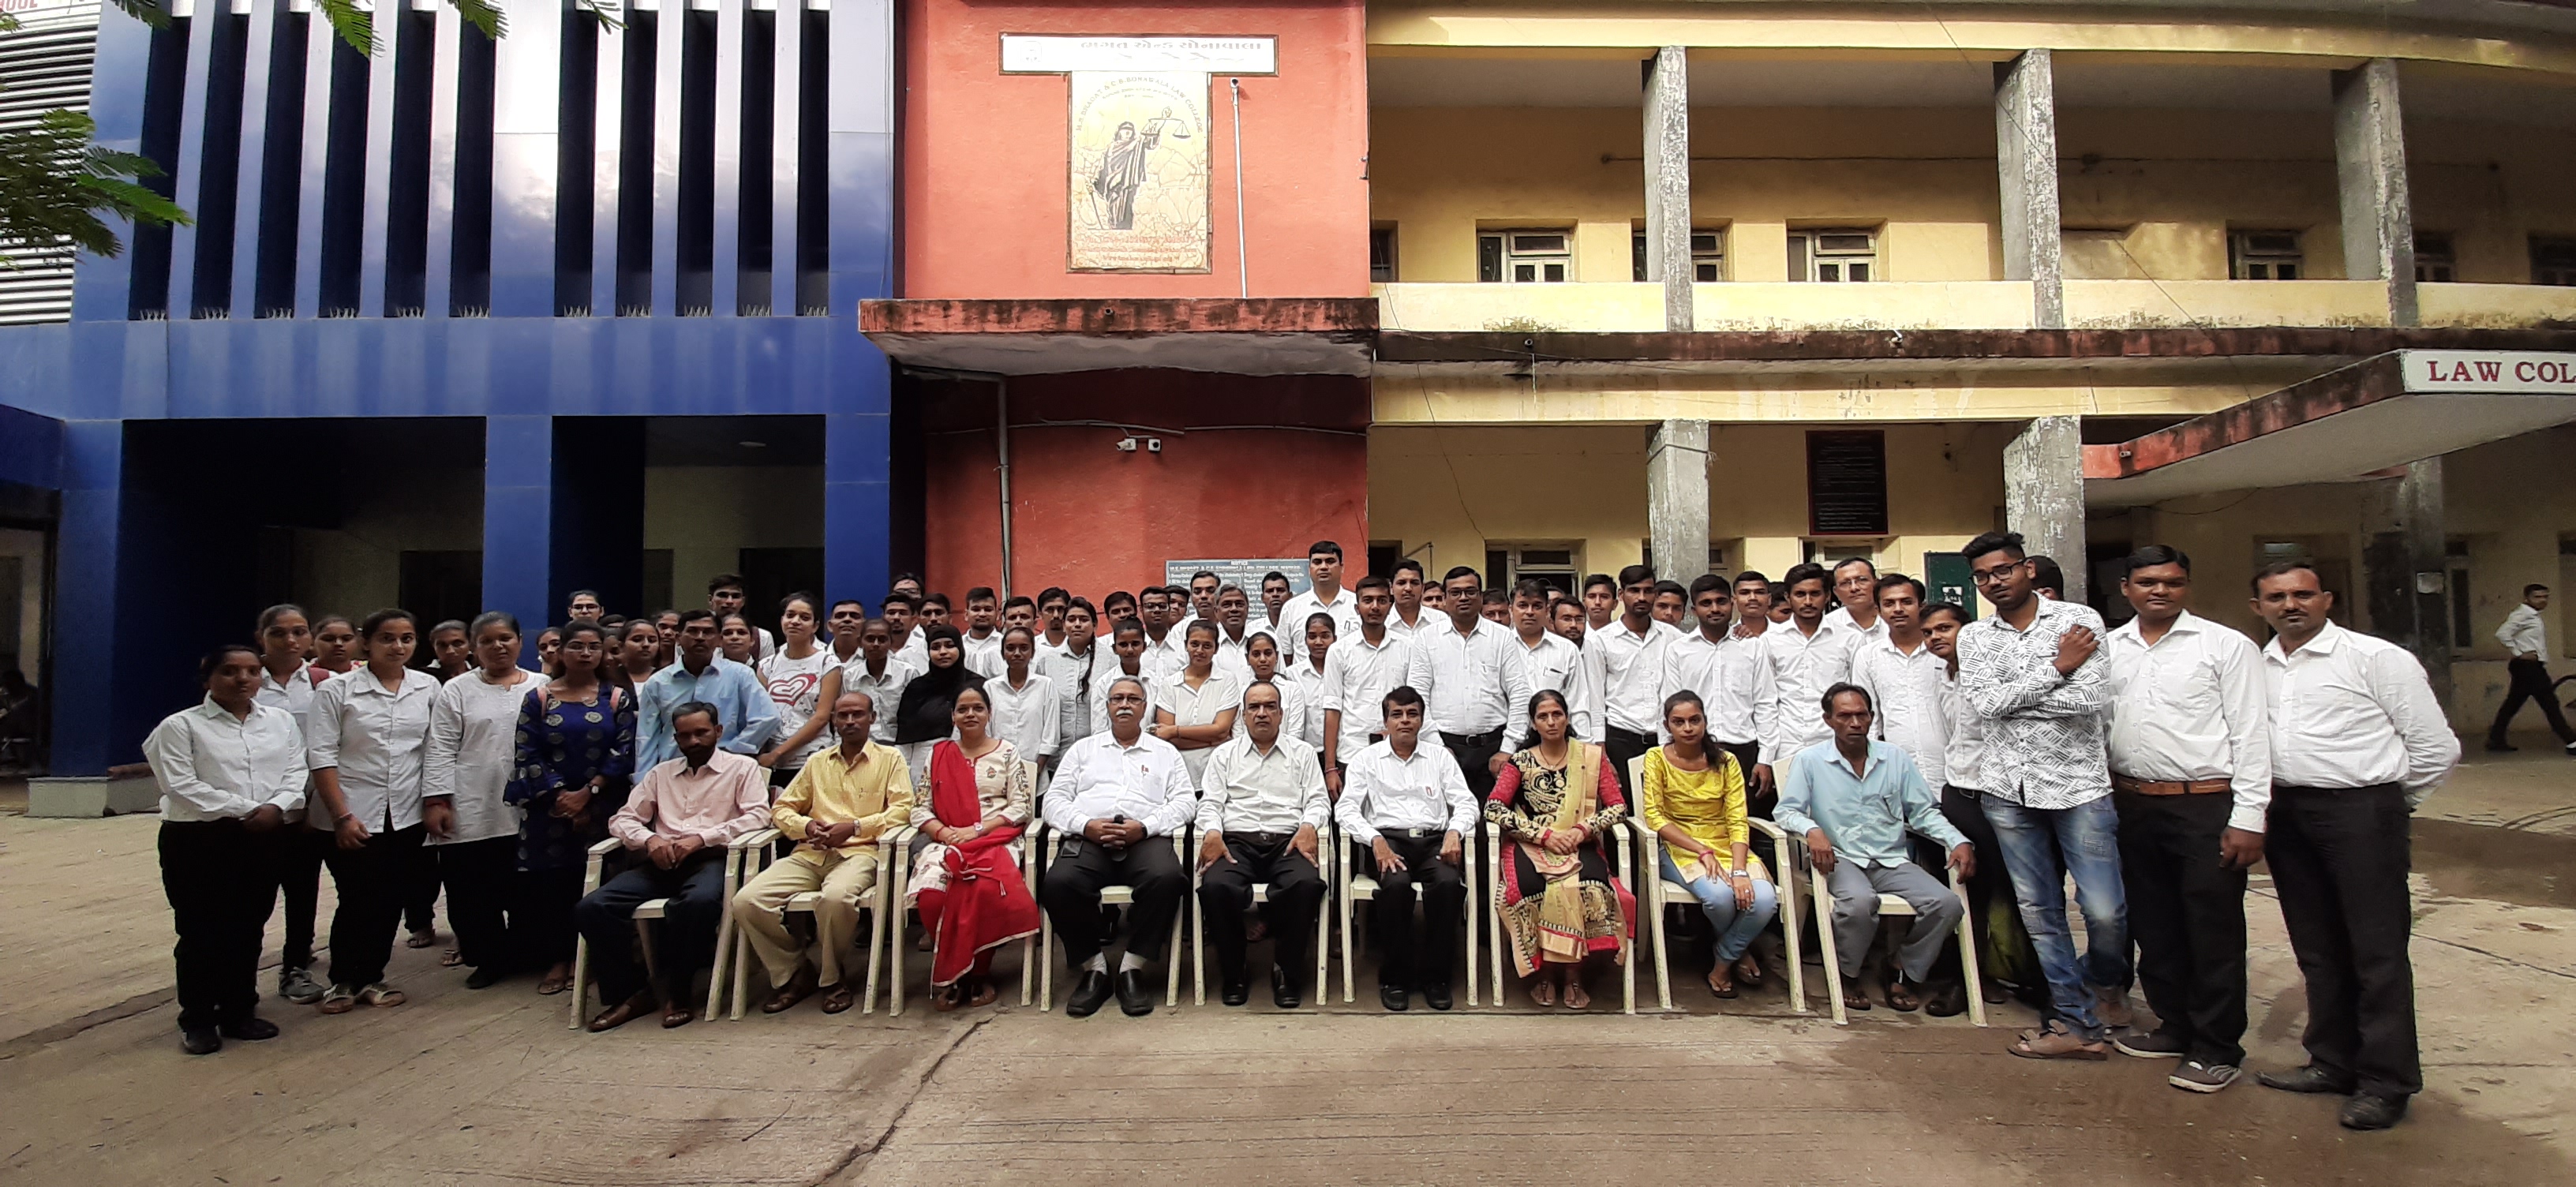 M.S. Bhagat and C.S. Sonawala Law College, Nadiad Image